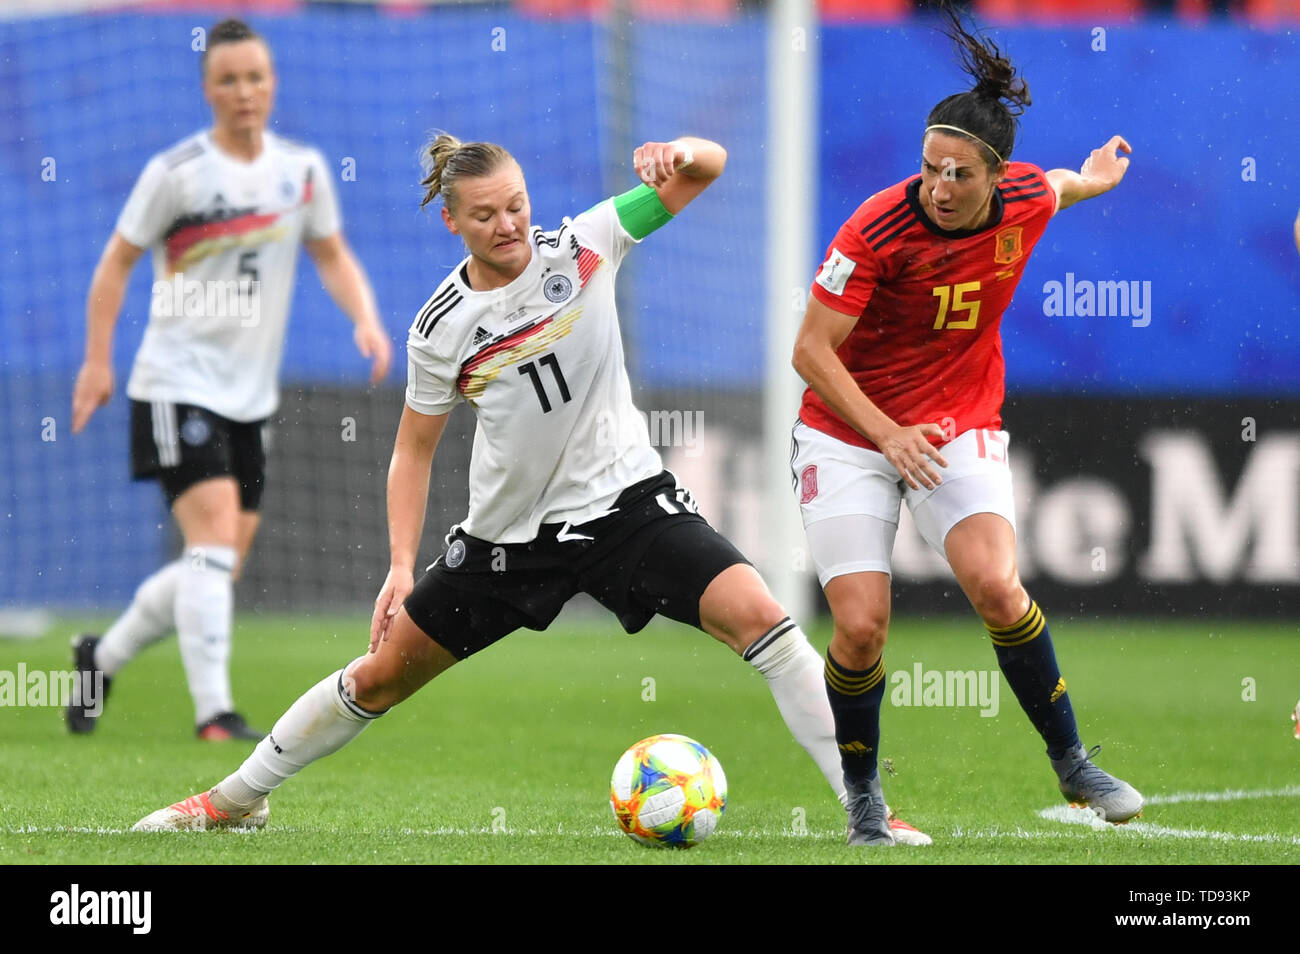 12 june 2019 Valenciennes, France Soccer FIFA Womens World Cup 2019 France: Germany v Spain   Duel Alexandra Popp (DFB-Frauen) (11) with Silvia Meseguer (Spanien) (15) Stock Photo